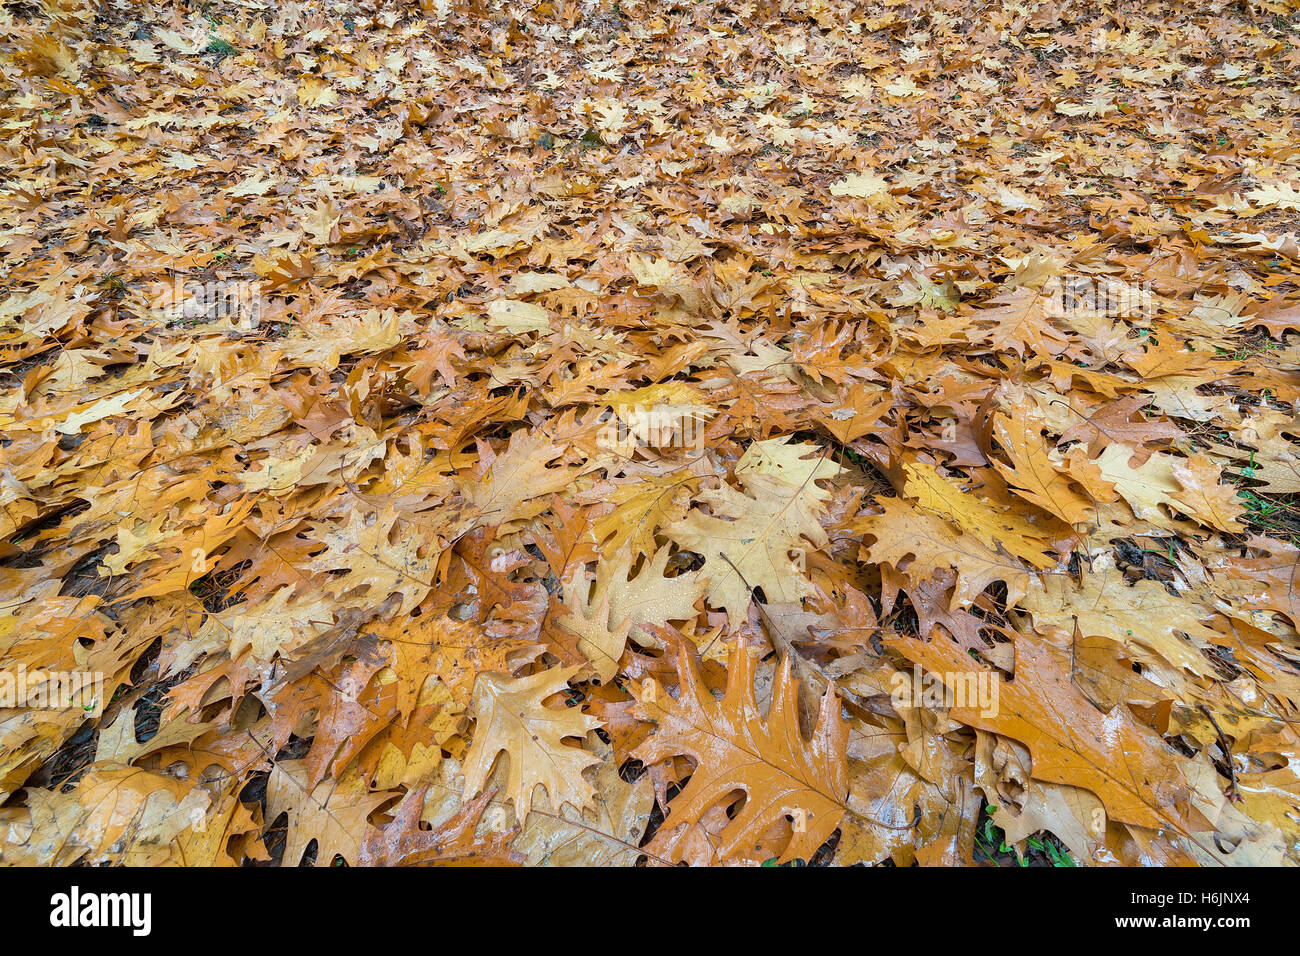 Fallen Oak Leaves on the Ground in Garden Park during Fall Season Stock Photo